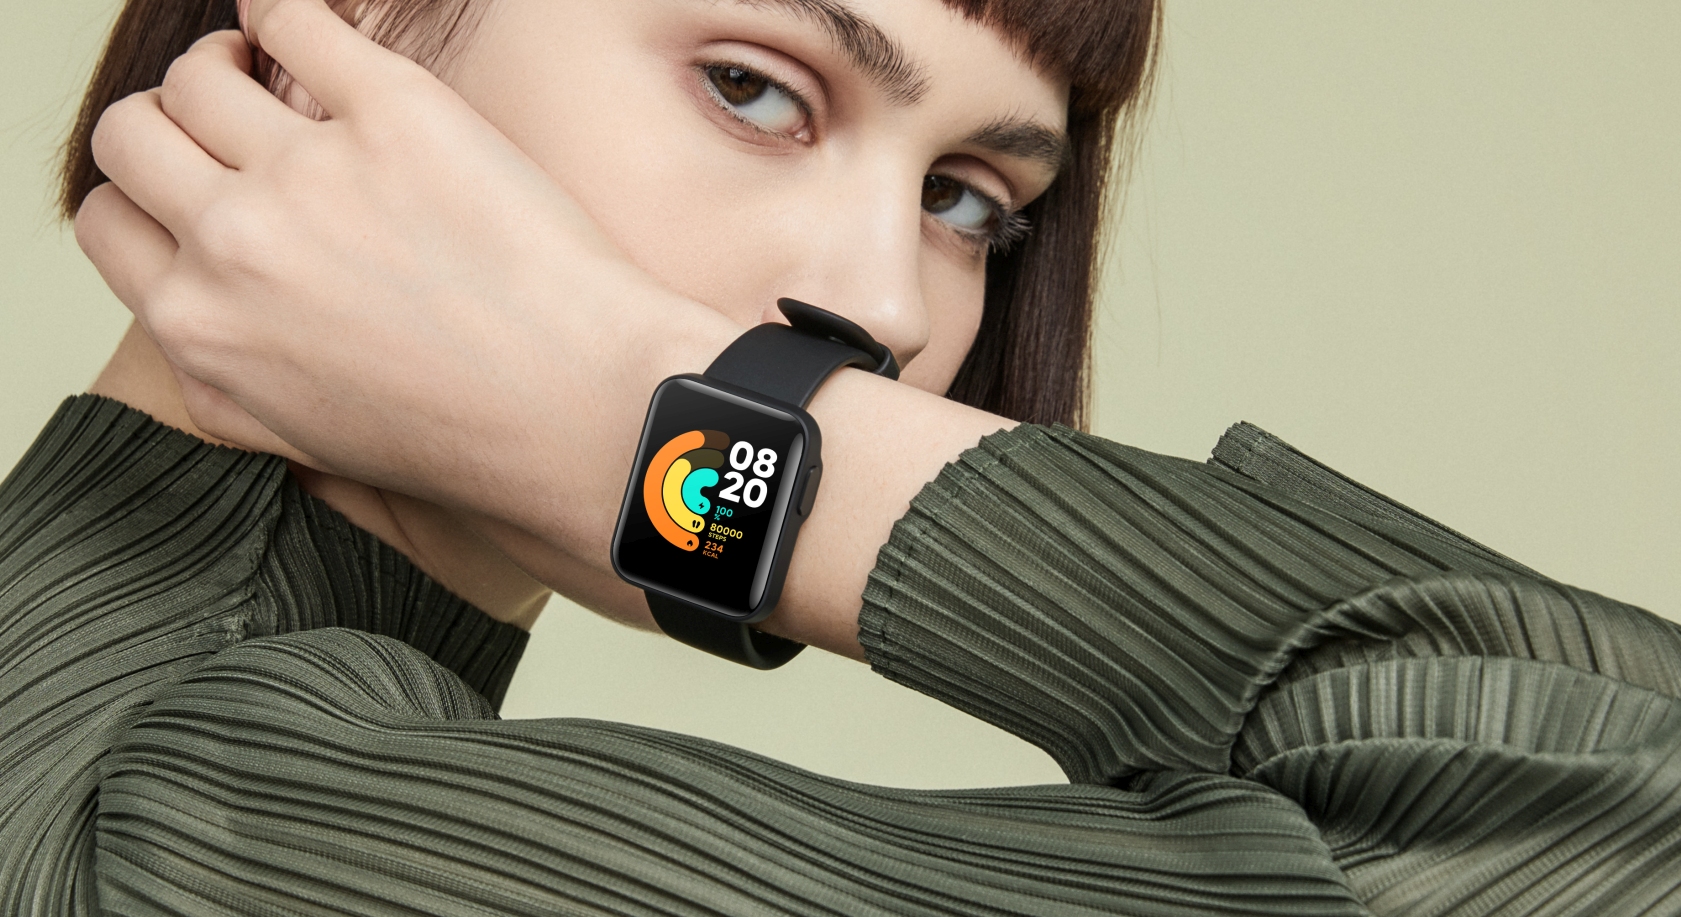 Xiaomi Mi Watch И Айфон